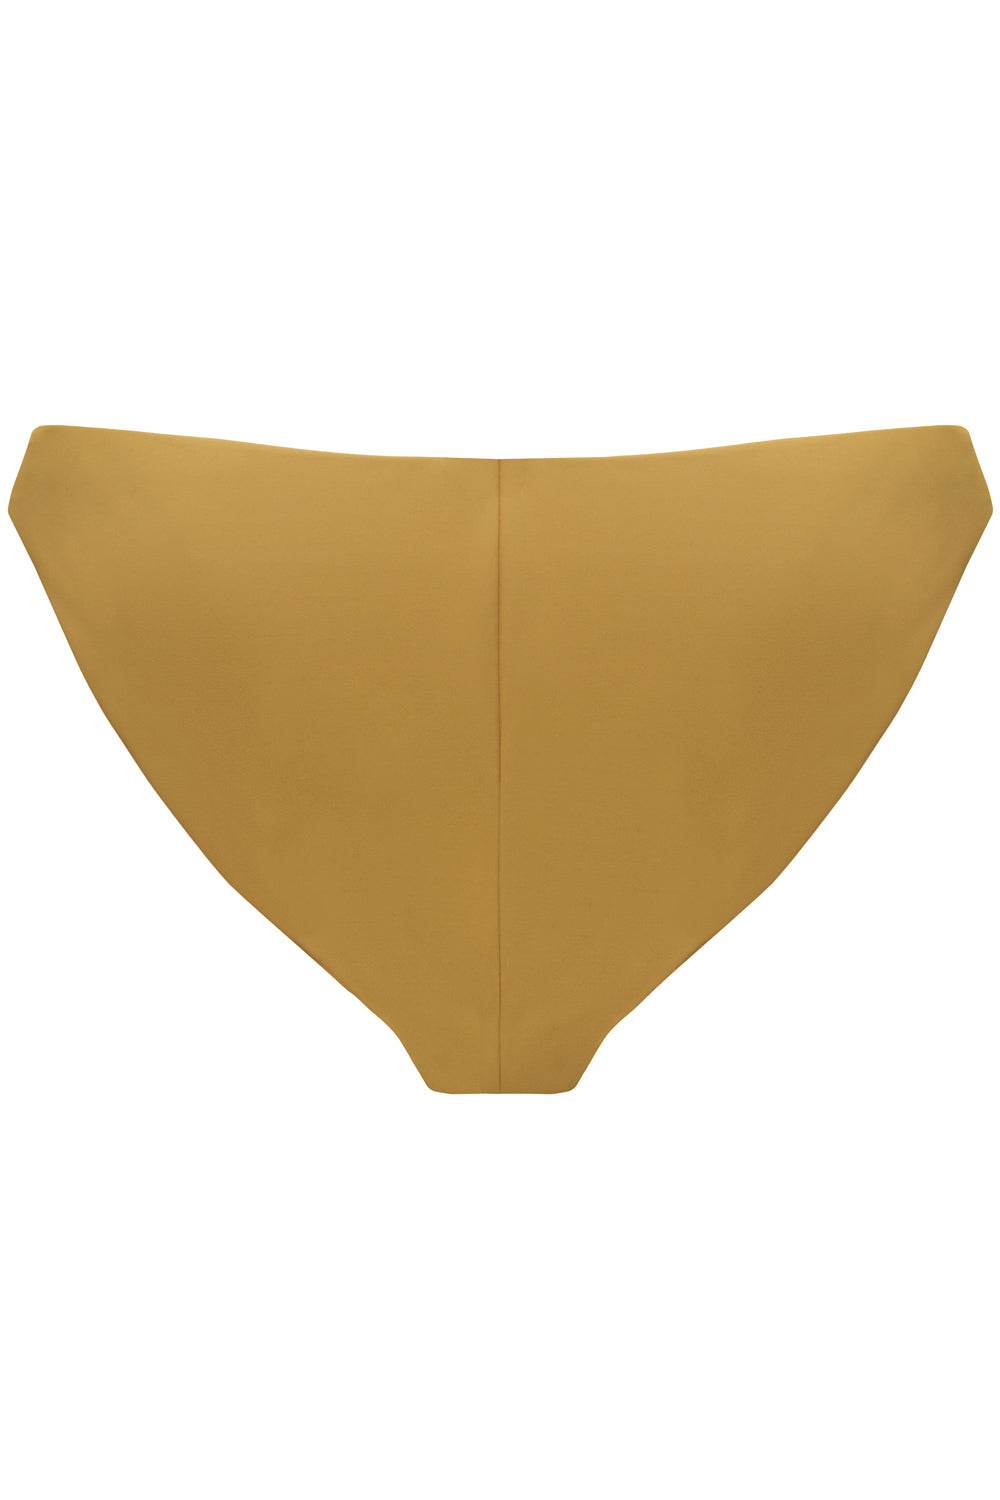 Radiya Golden Beige bikini bottom - Bikini bottom by Keosme. Shop on yesUndress